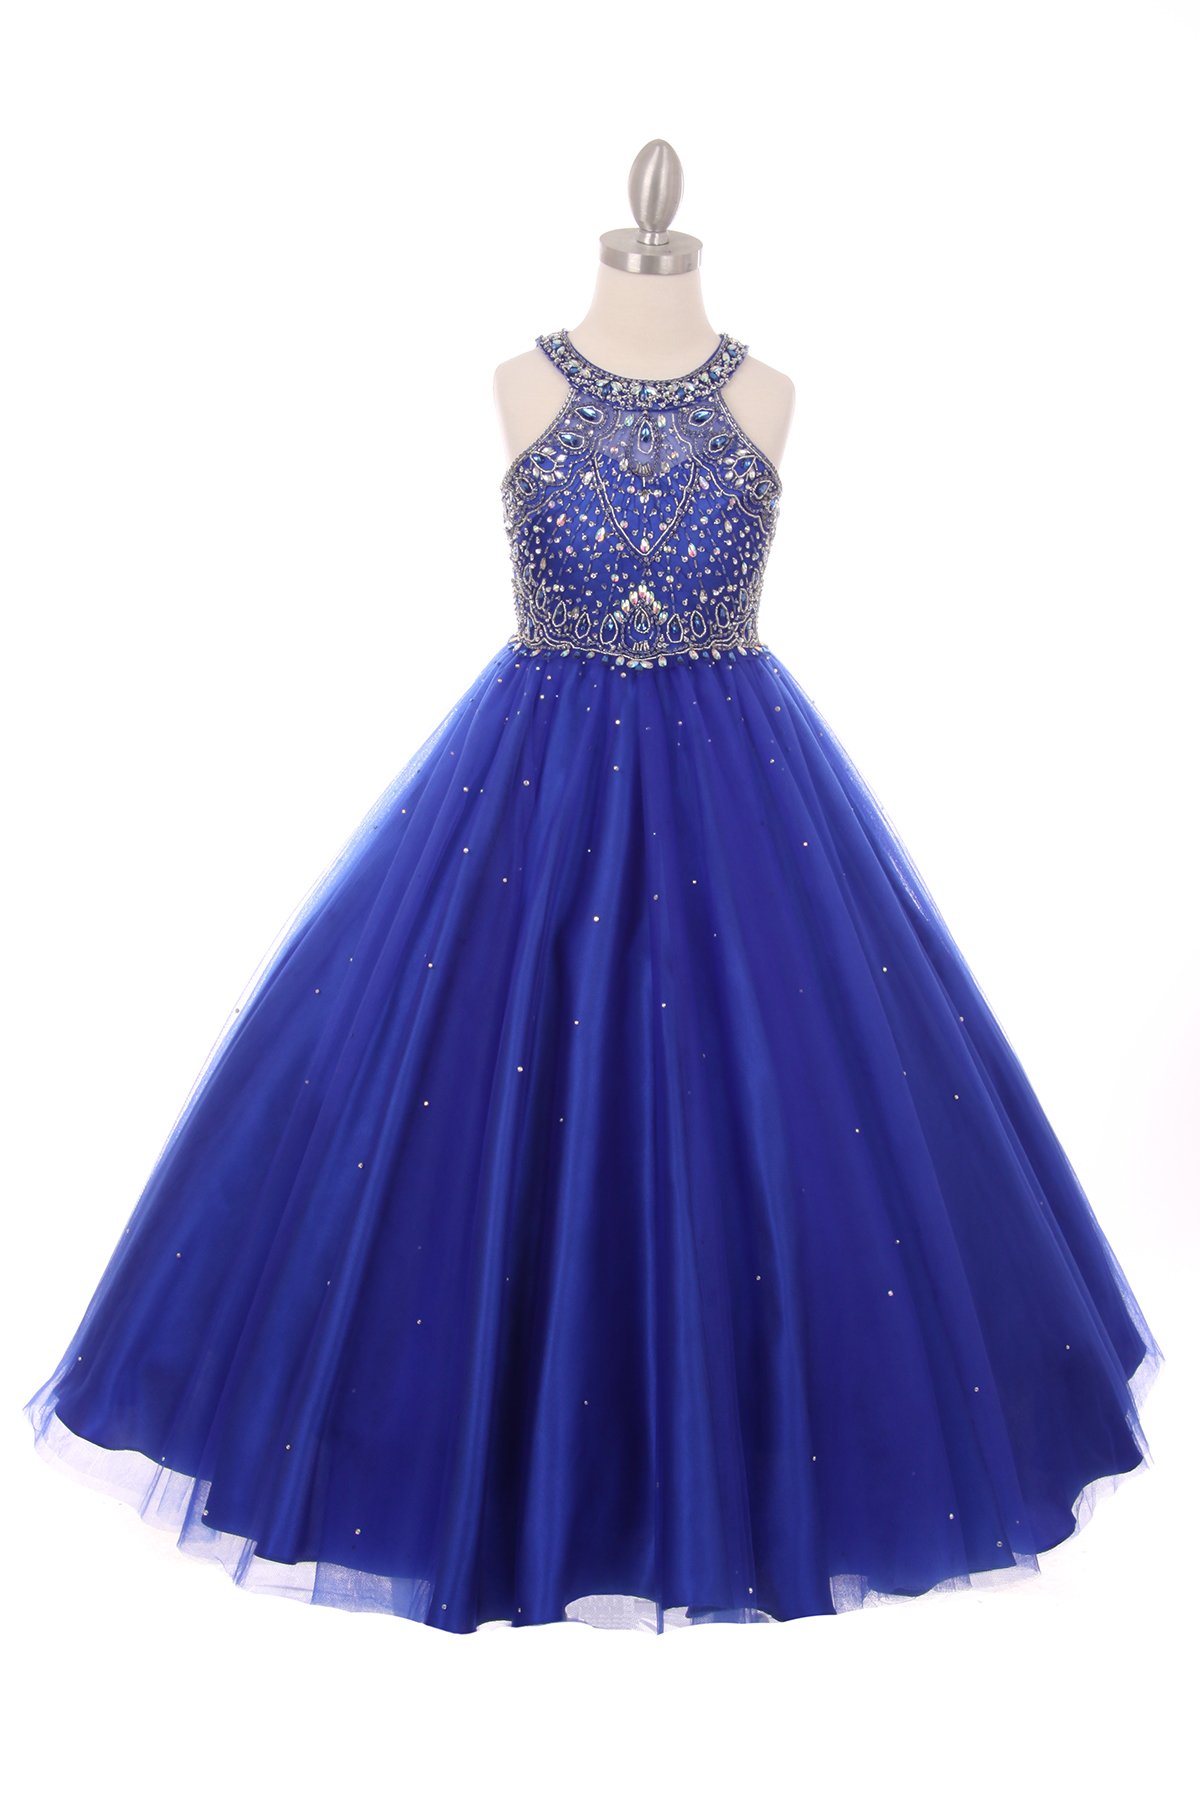 Girls royal blue princess style long dress rhinestones pageant wedding party ball gown. Halter neck rhinestone dress.